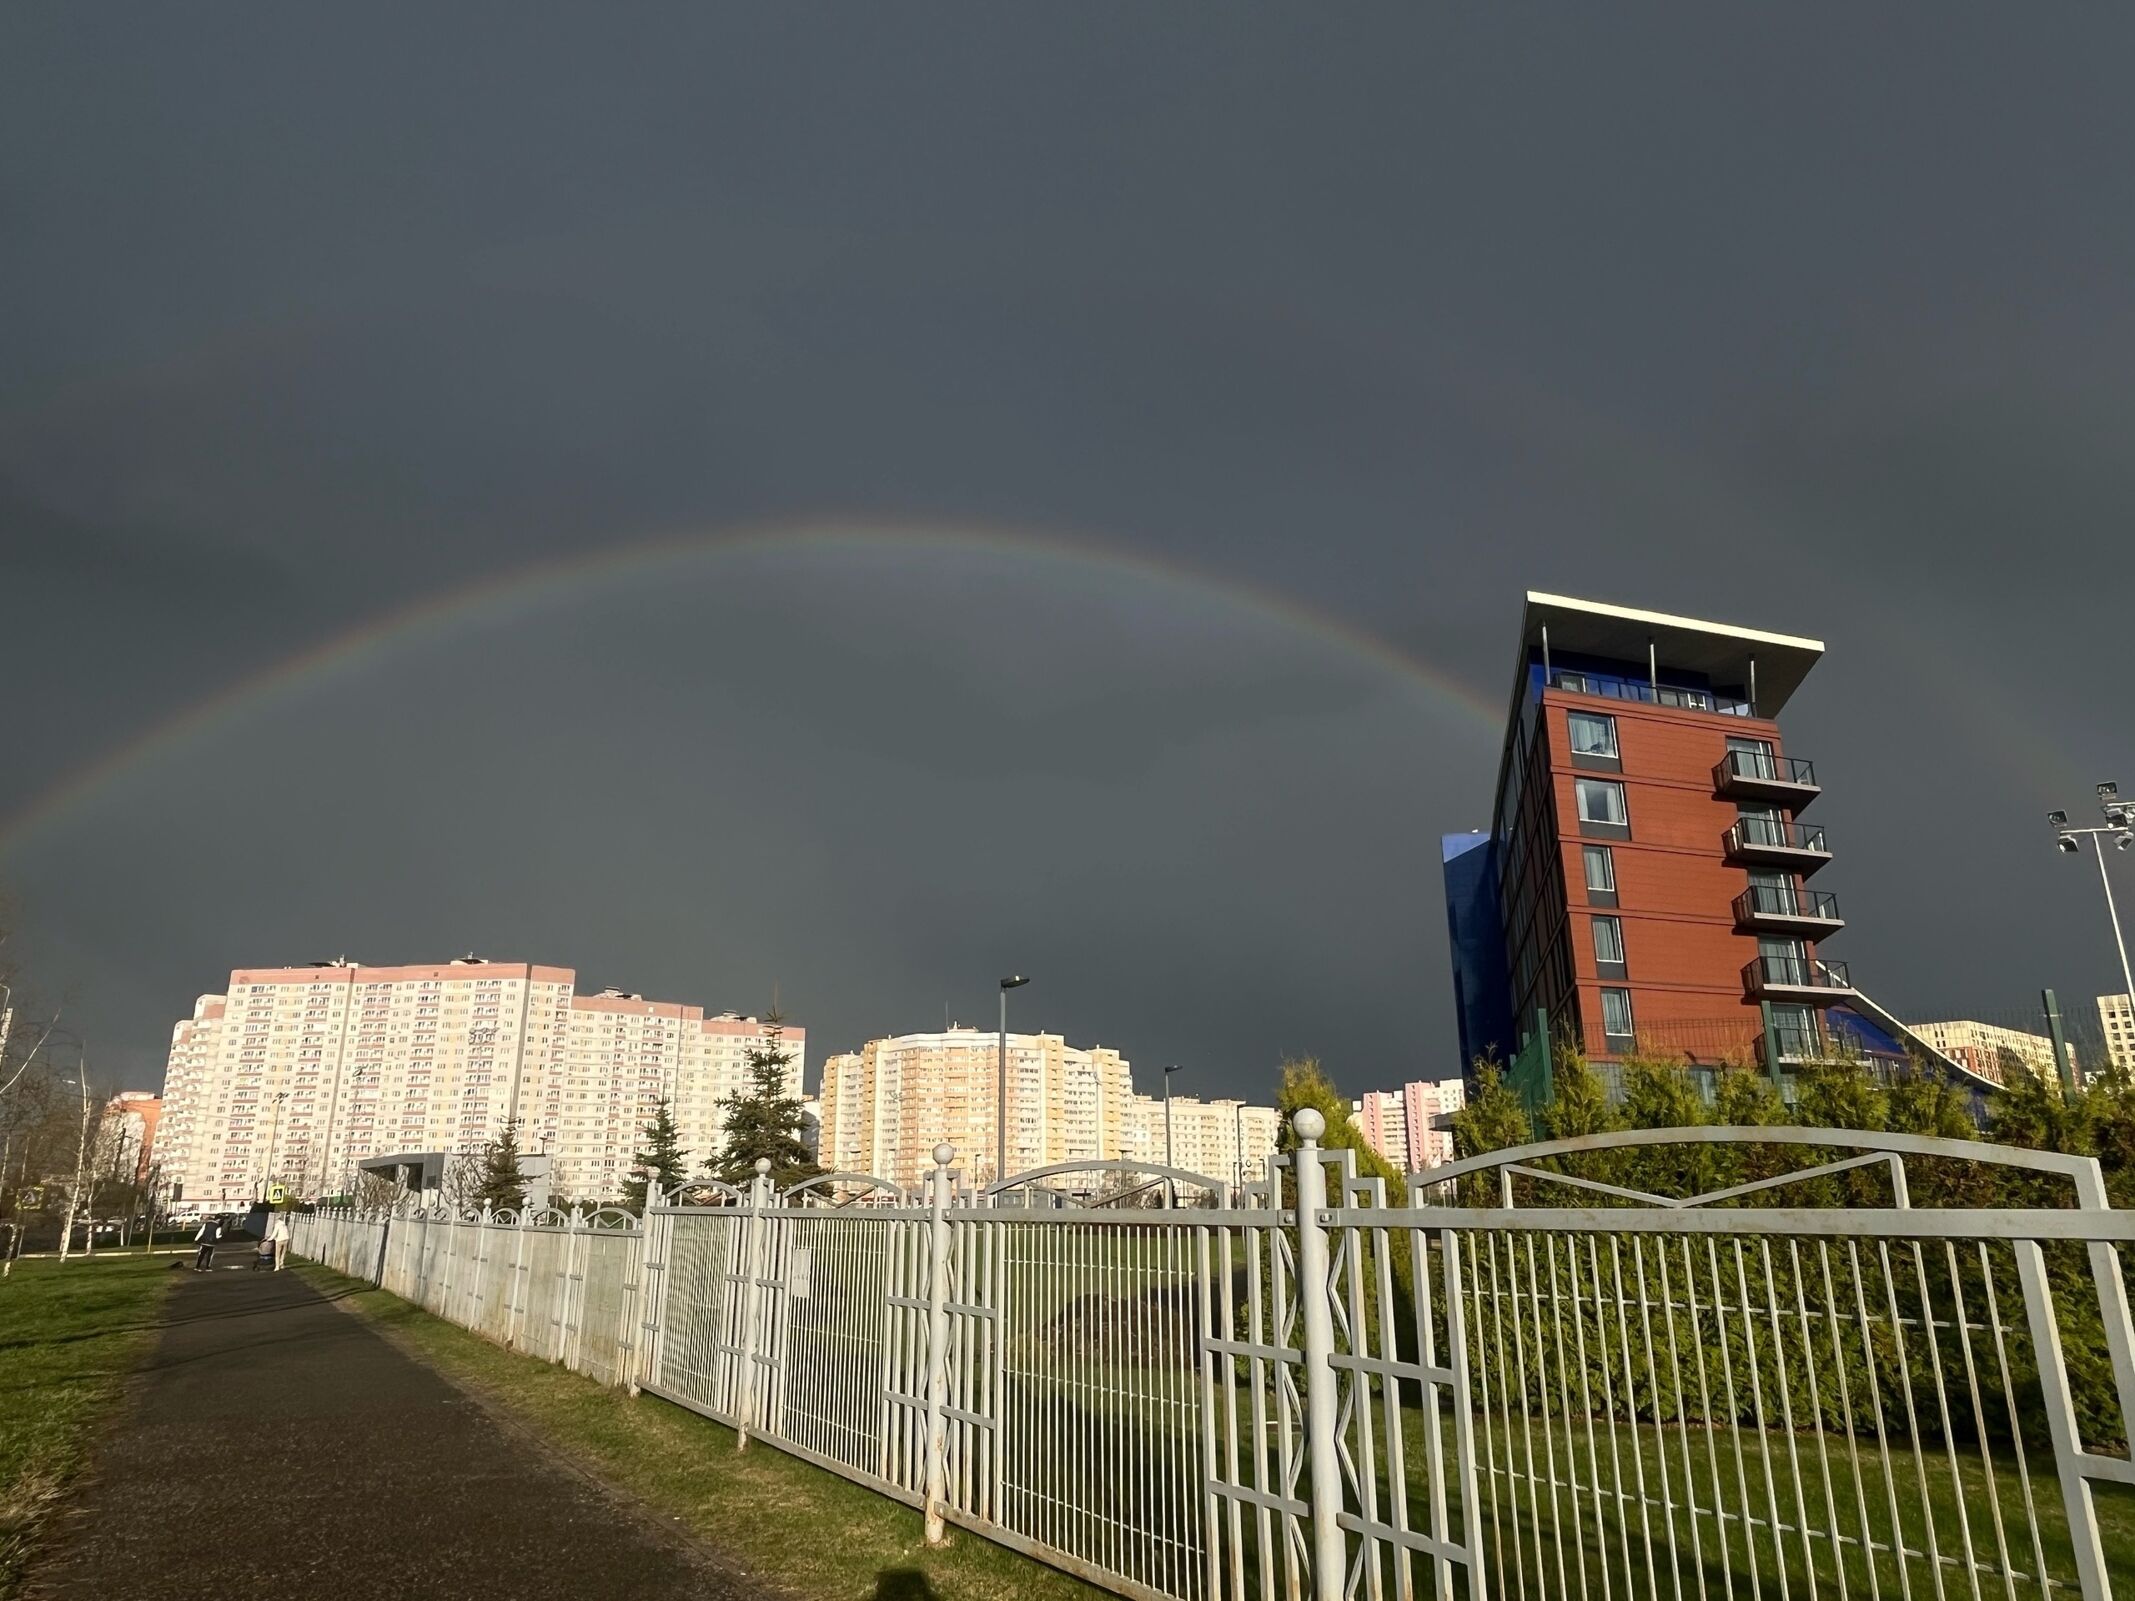 Над Ярославлем заметили двойную радугу